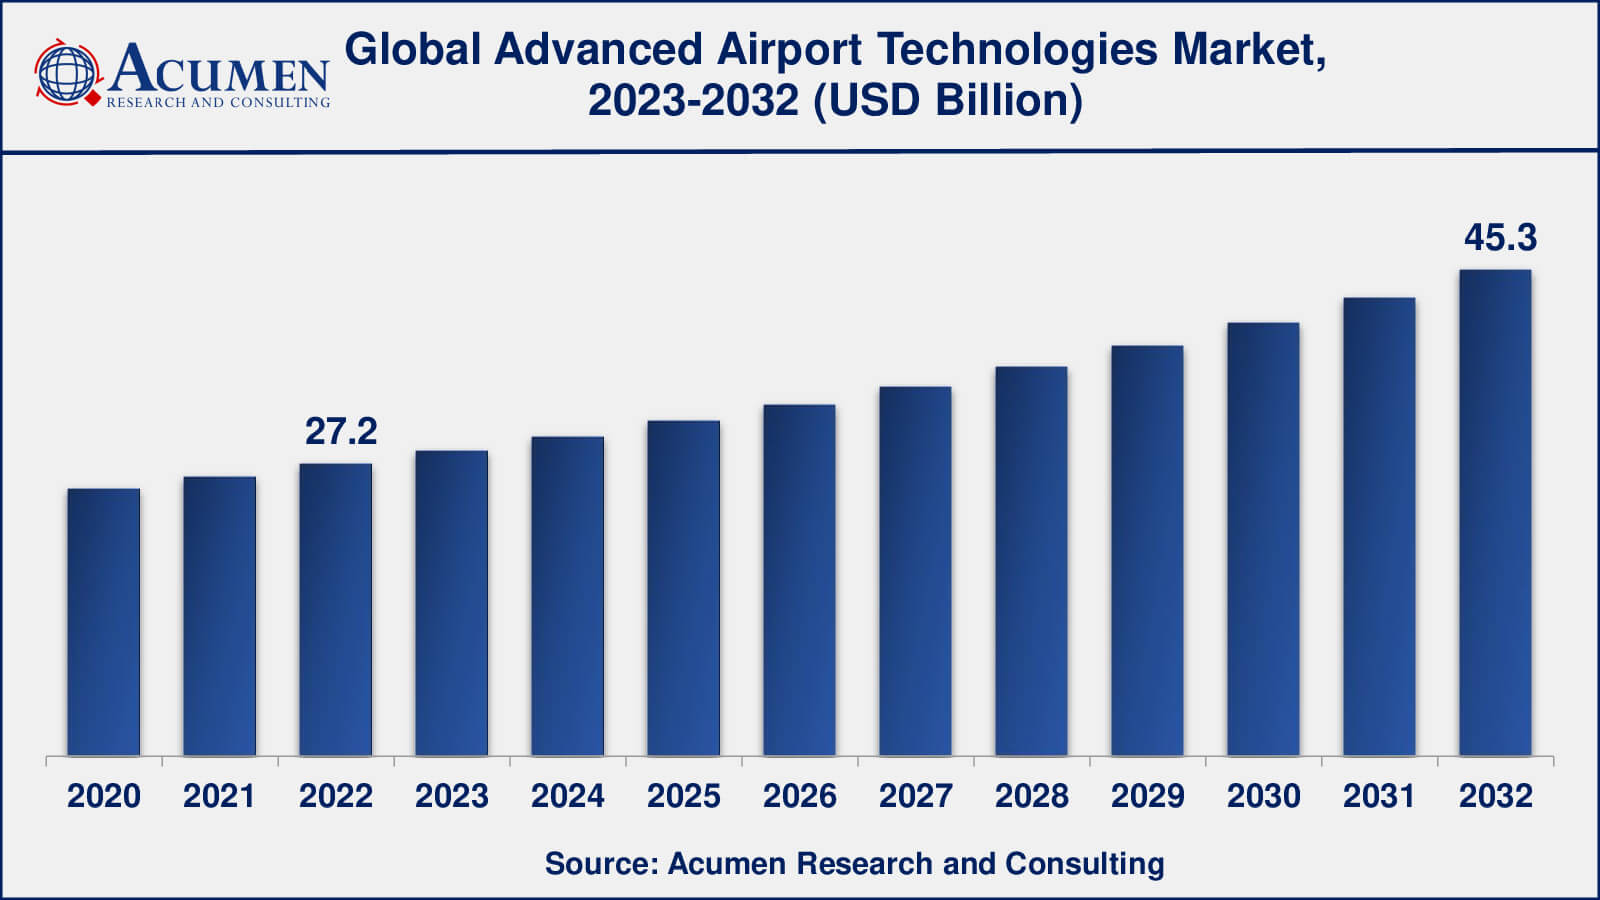 Global Advanced Airport Technologies Market Dynamics